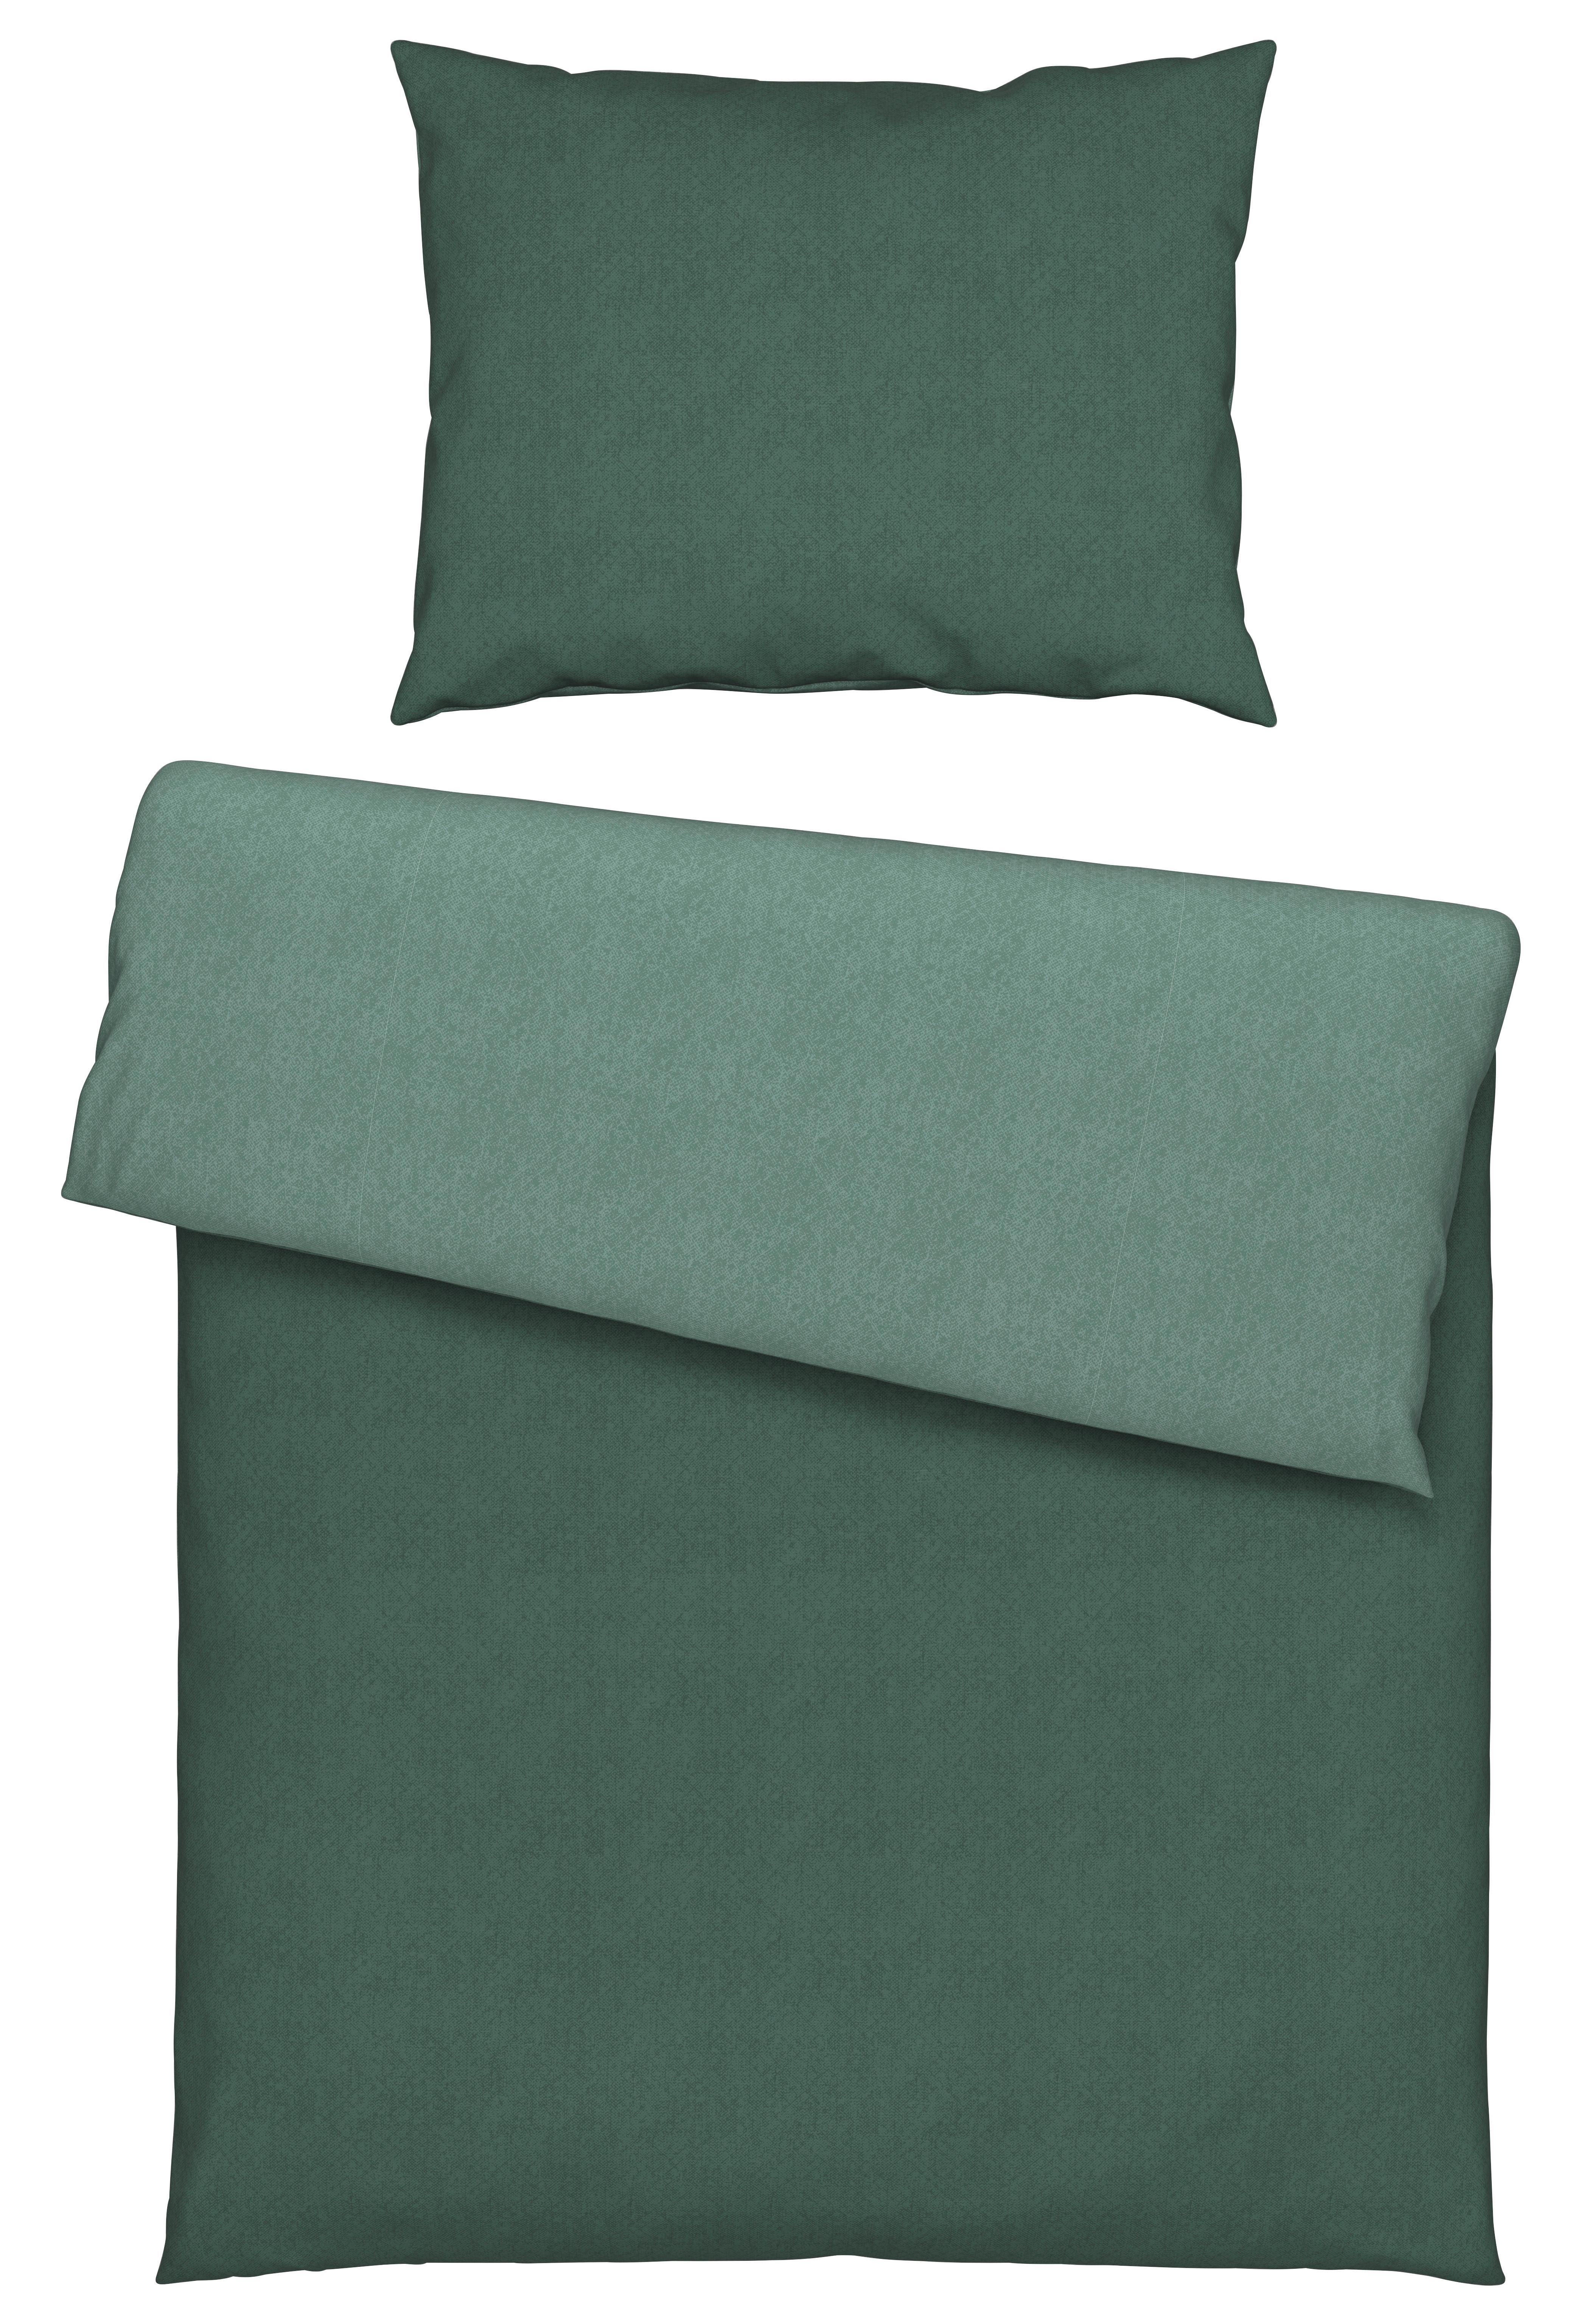 Posteljina 70/90cm 140/200cm Charline - svijetlo zelena/zelena, Konventionell, tekstil (140/200cm) - Modern Living